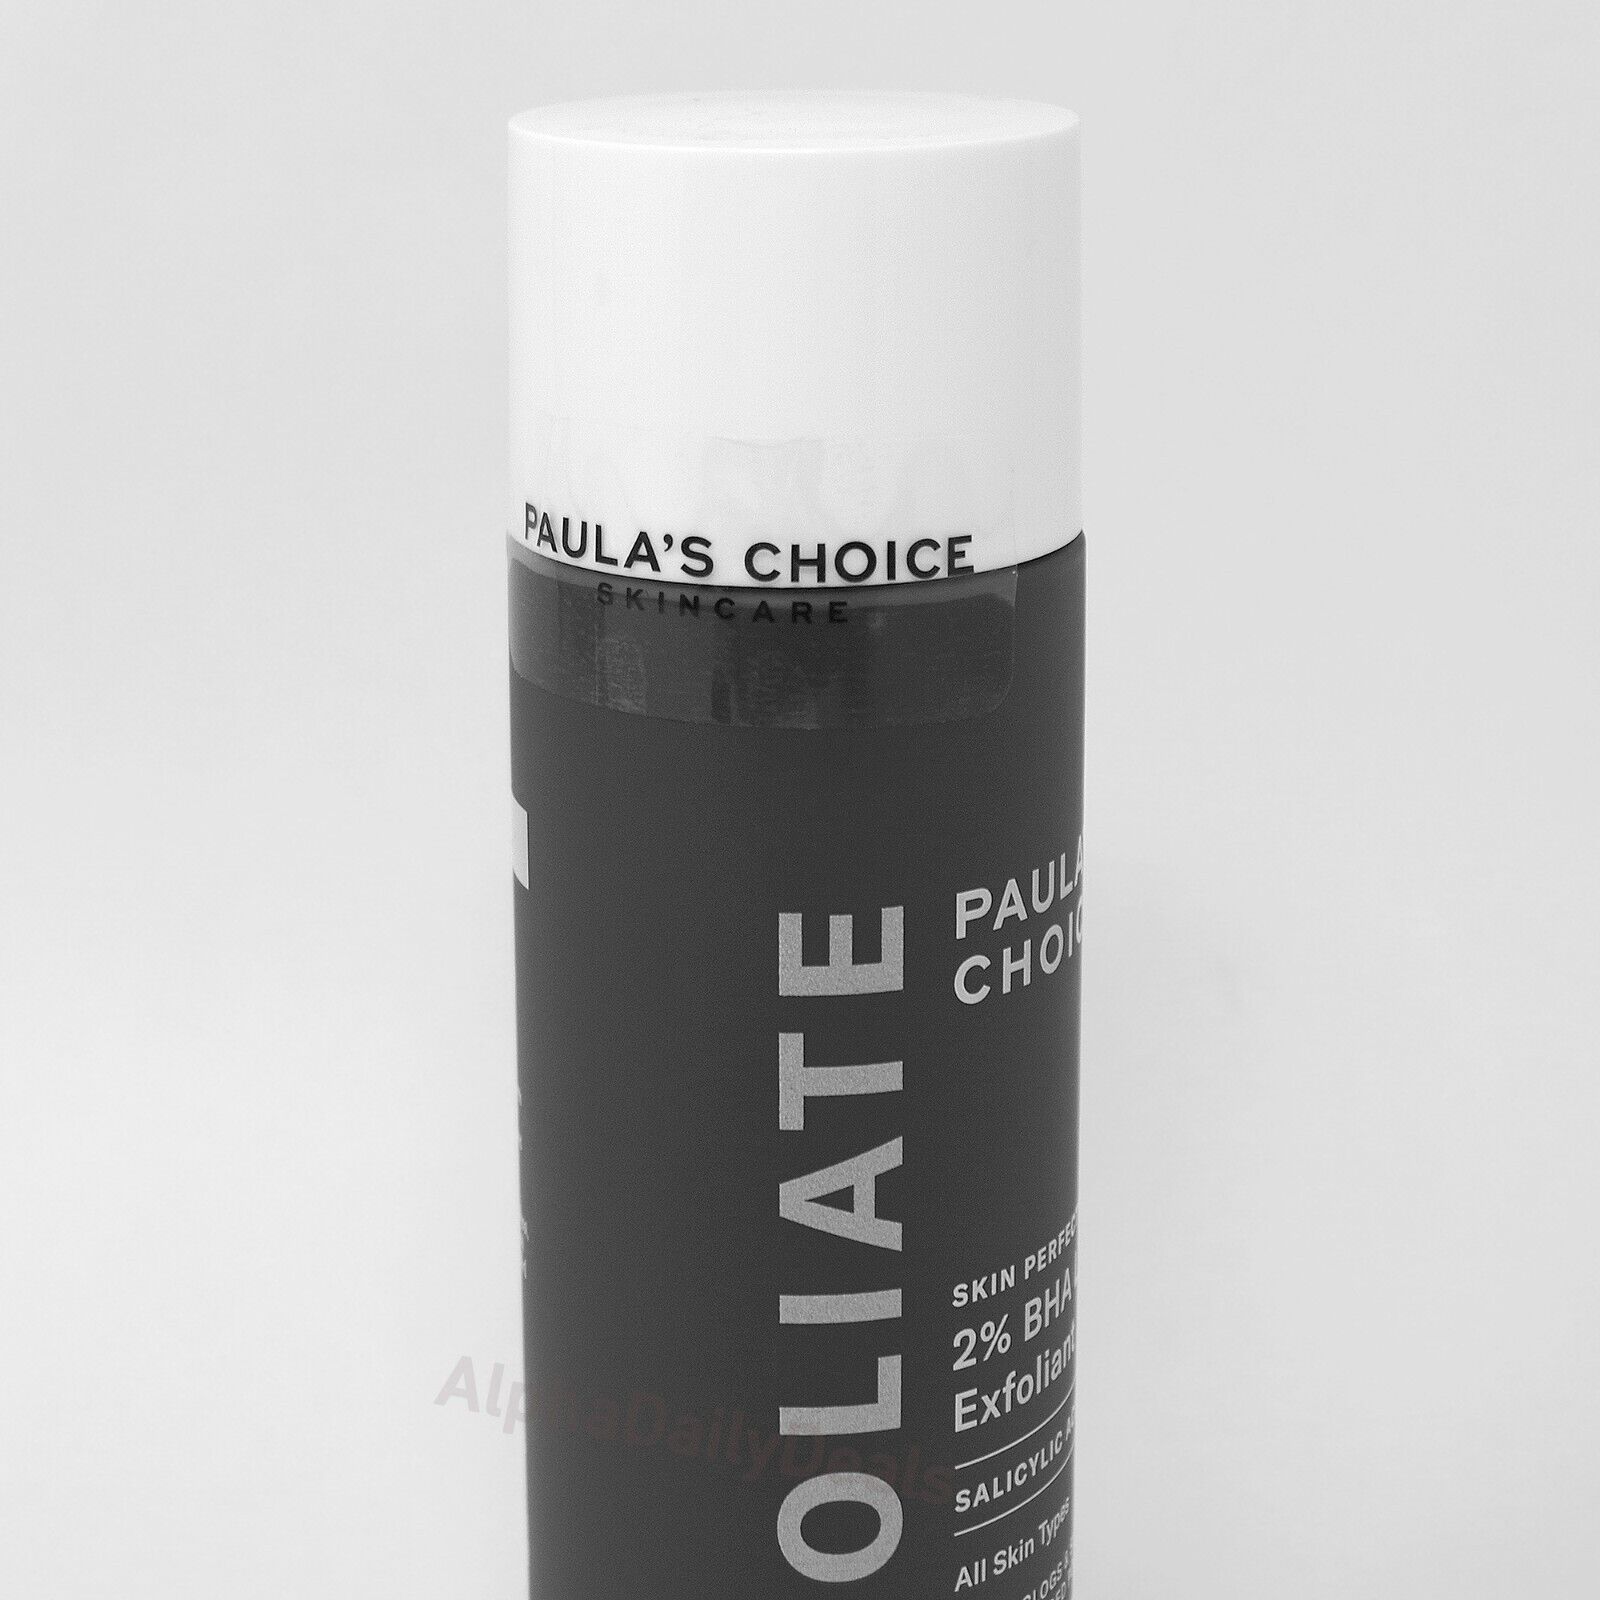 NEW Paula's Choice Skin Perfecting 2% BHA Liquid Salicylic Acid Exfoliant 4 oz